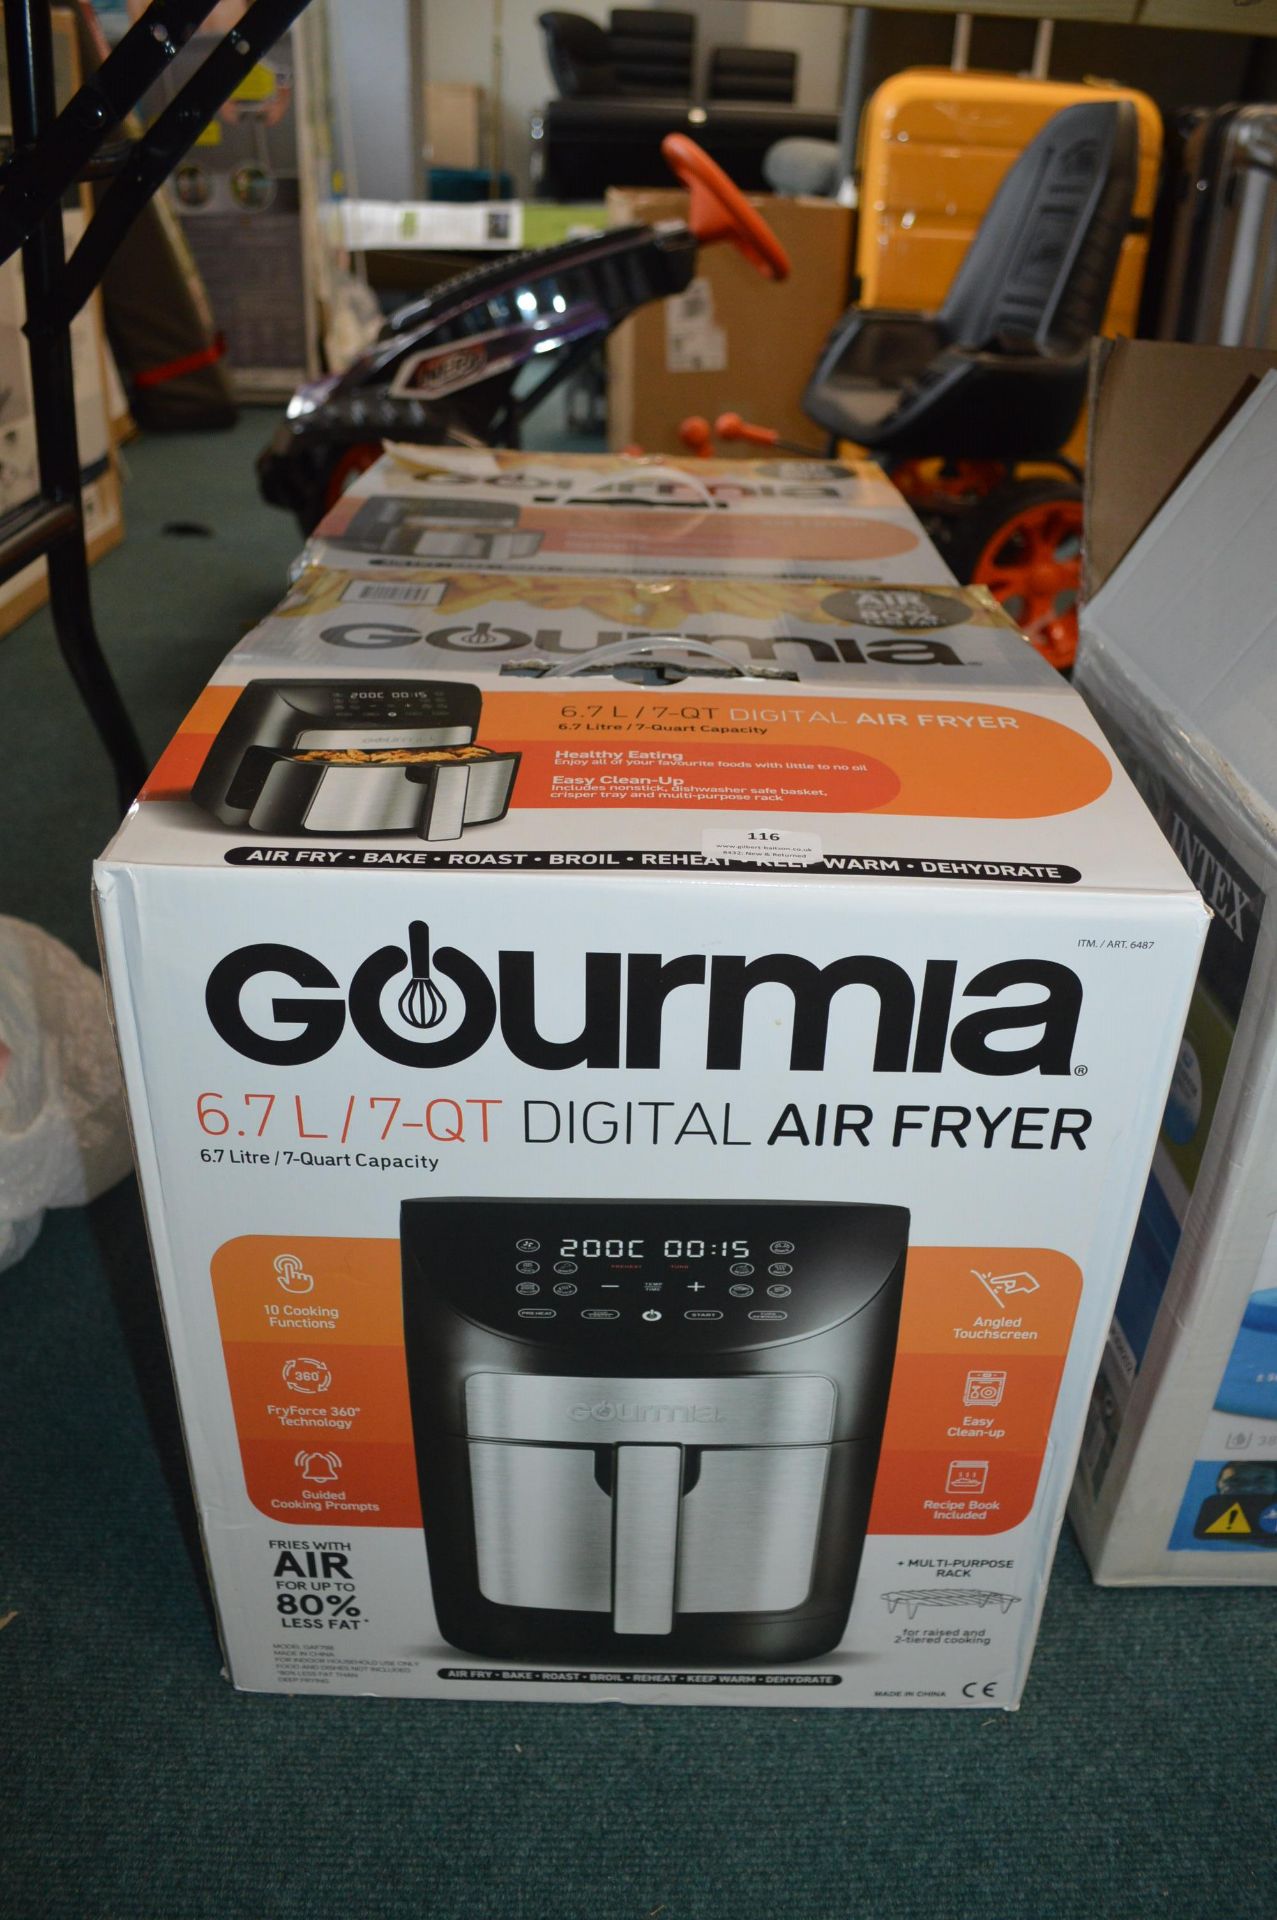 *Gourmia Digital Air Fryer